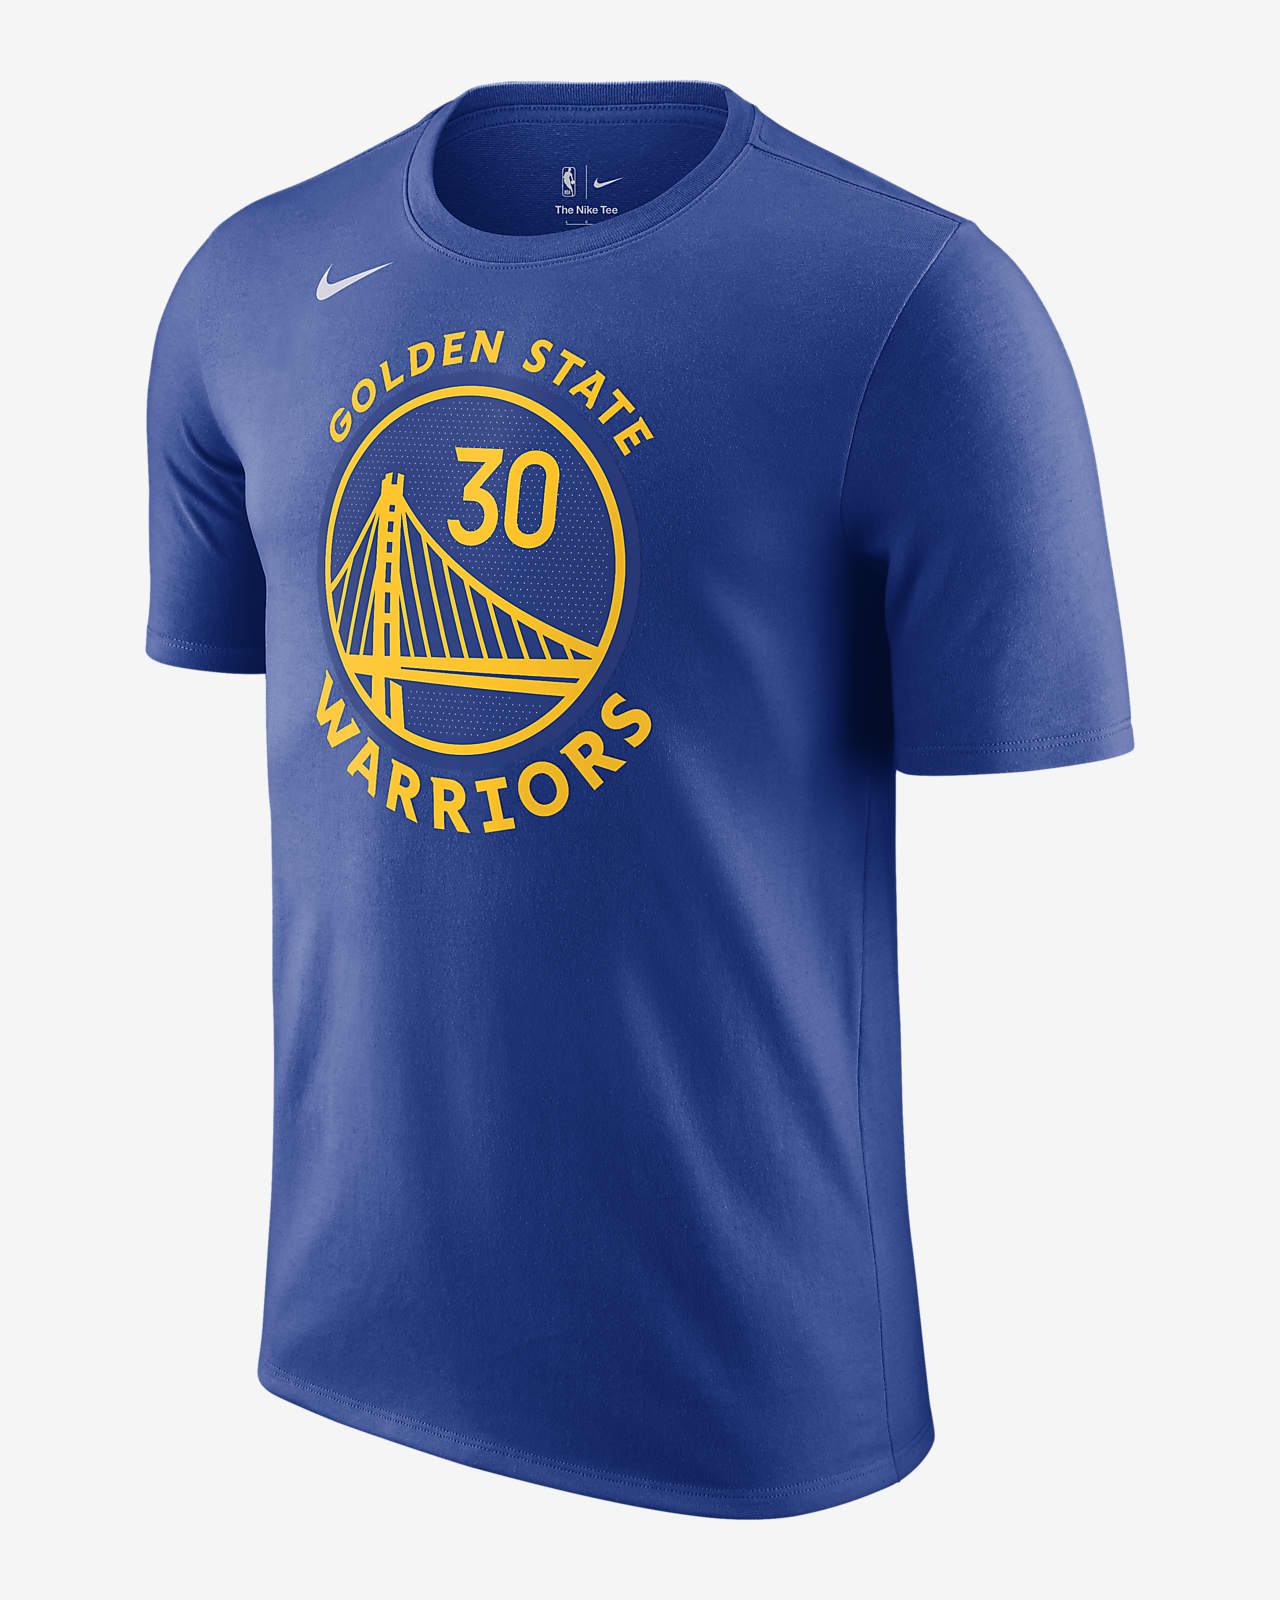 Golden State Warriors Nike NBA Erkek Tişörtü